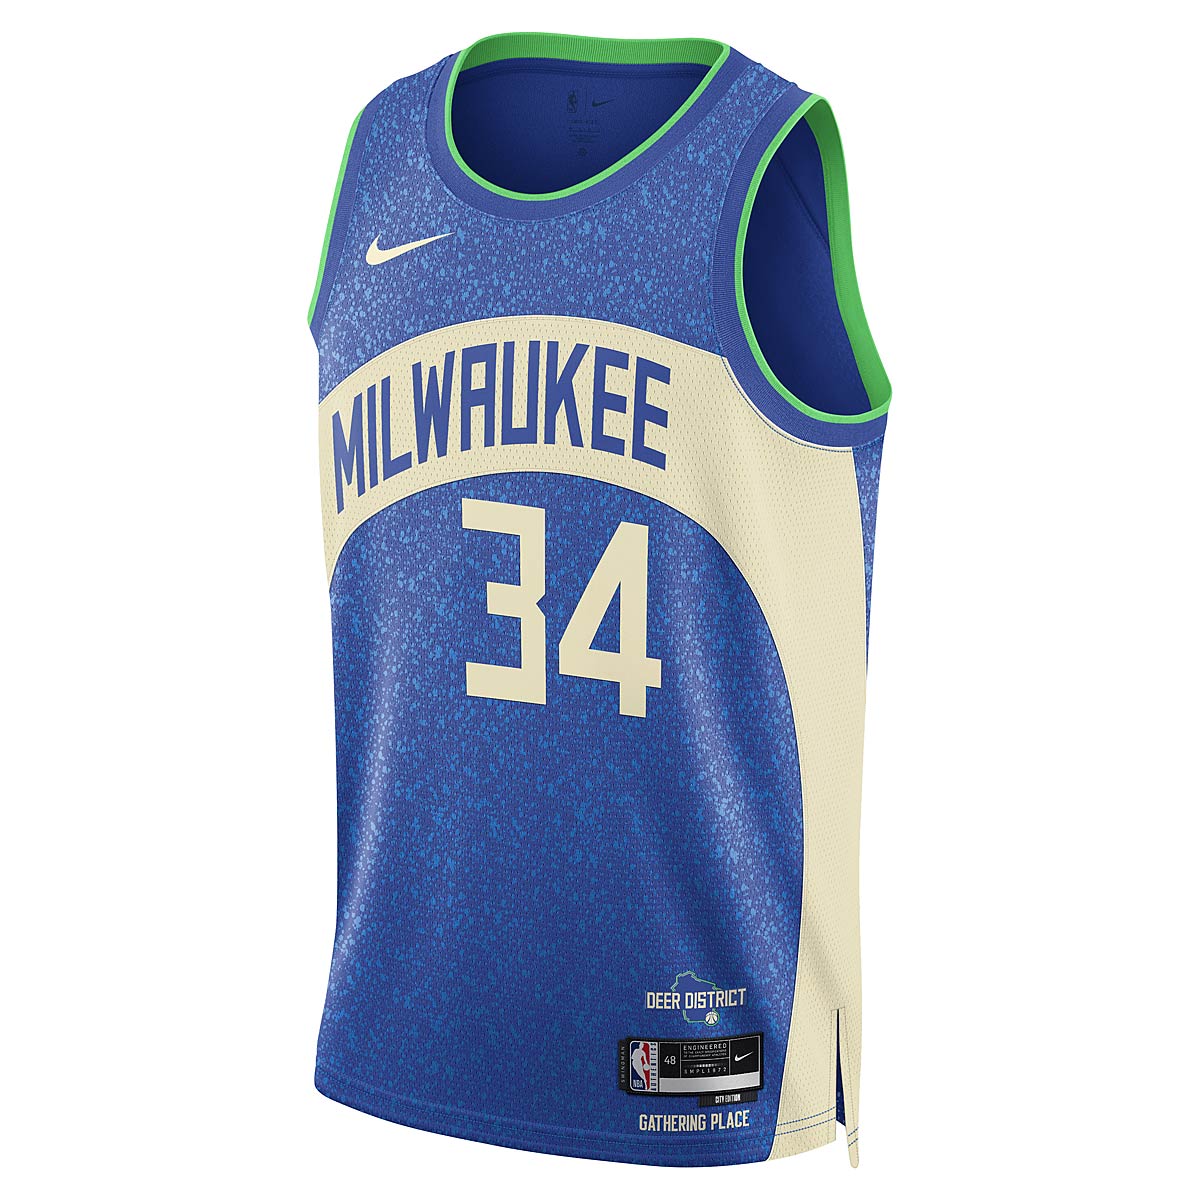 Nike NBA Milwaukee Bucks Dri-fit City Edition Swingman Jersey Giannis Antetokounmpo, Photo Blau/schwarz-weiß-university Rot L